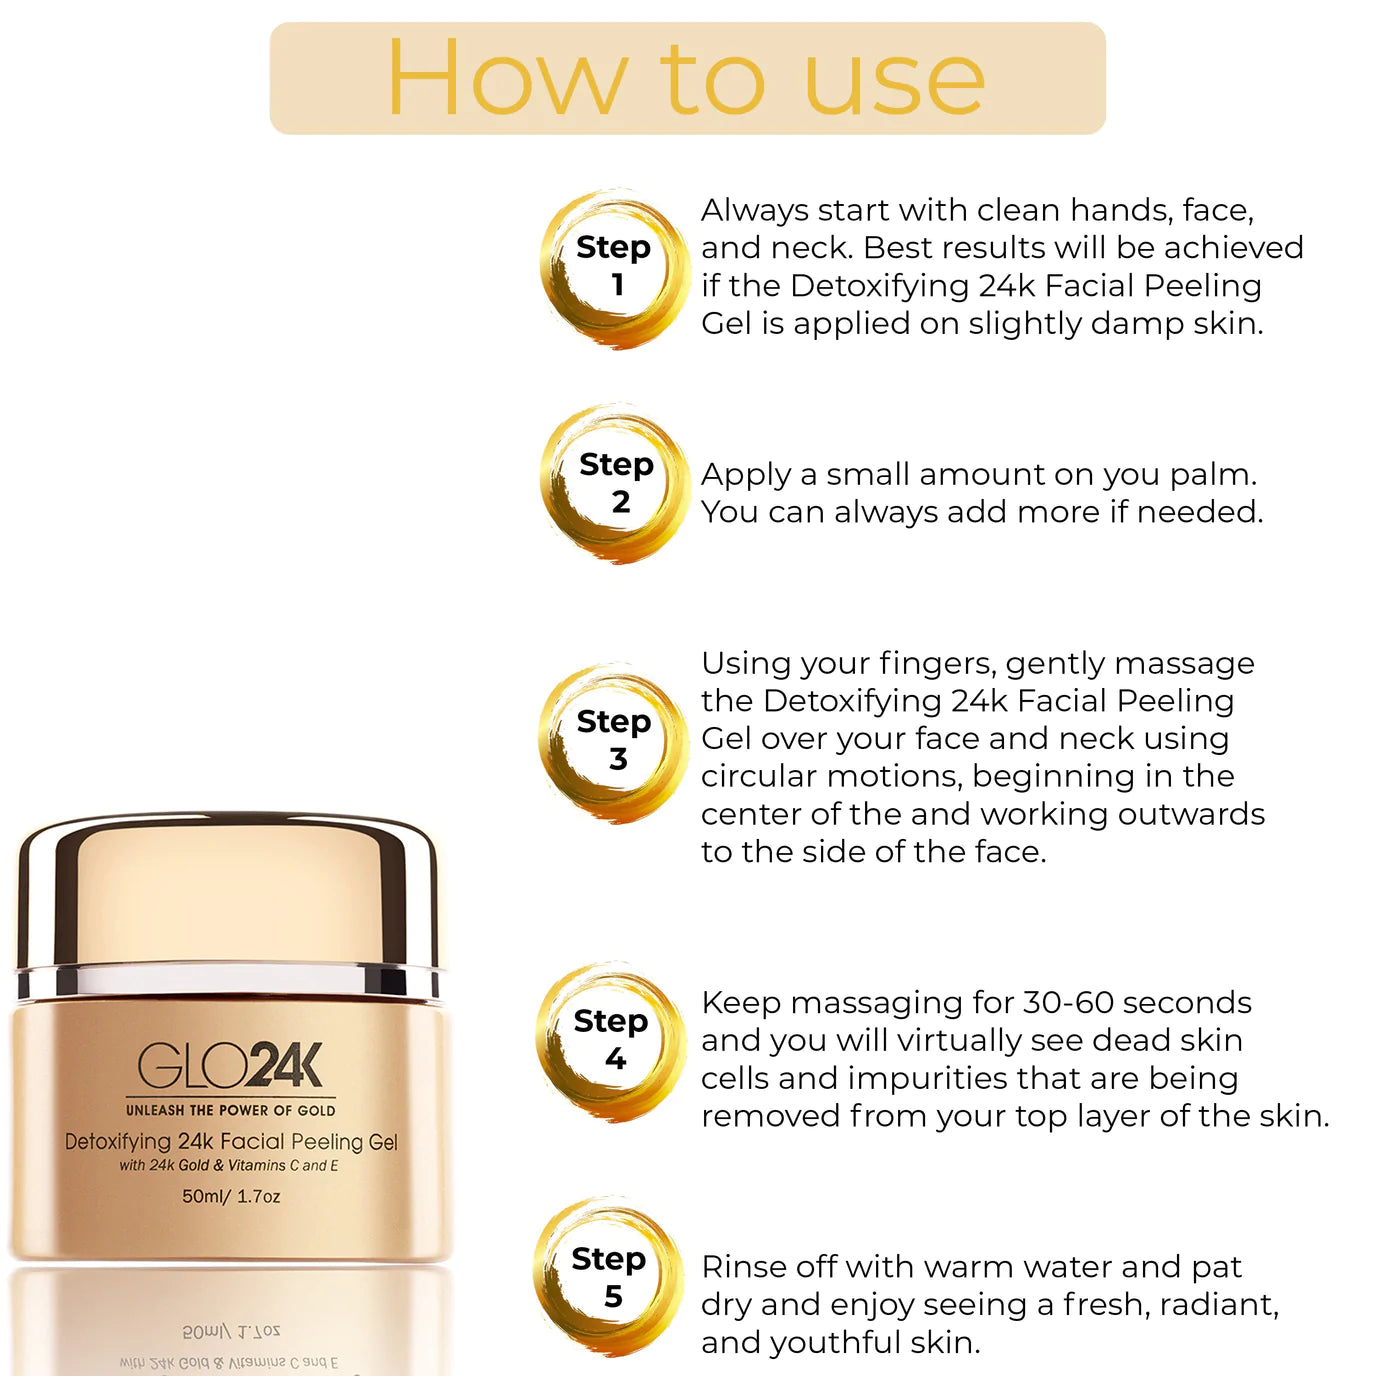 How to use GLO24K Detoxifying 24k Facial Peeling Gel